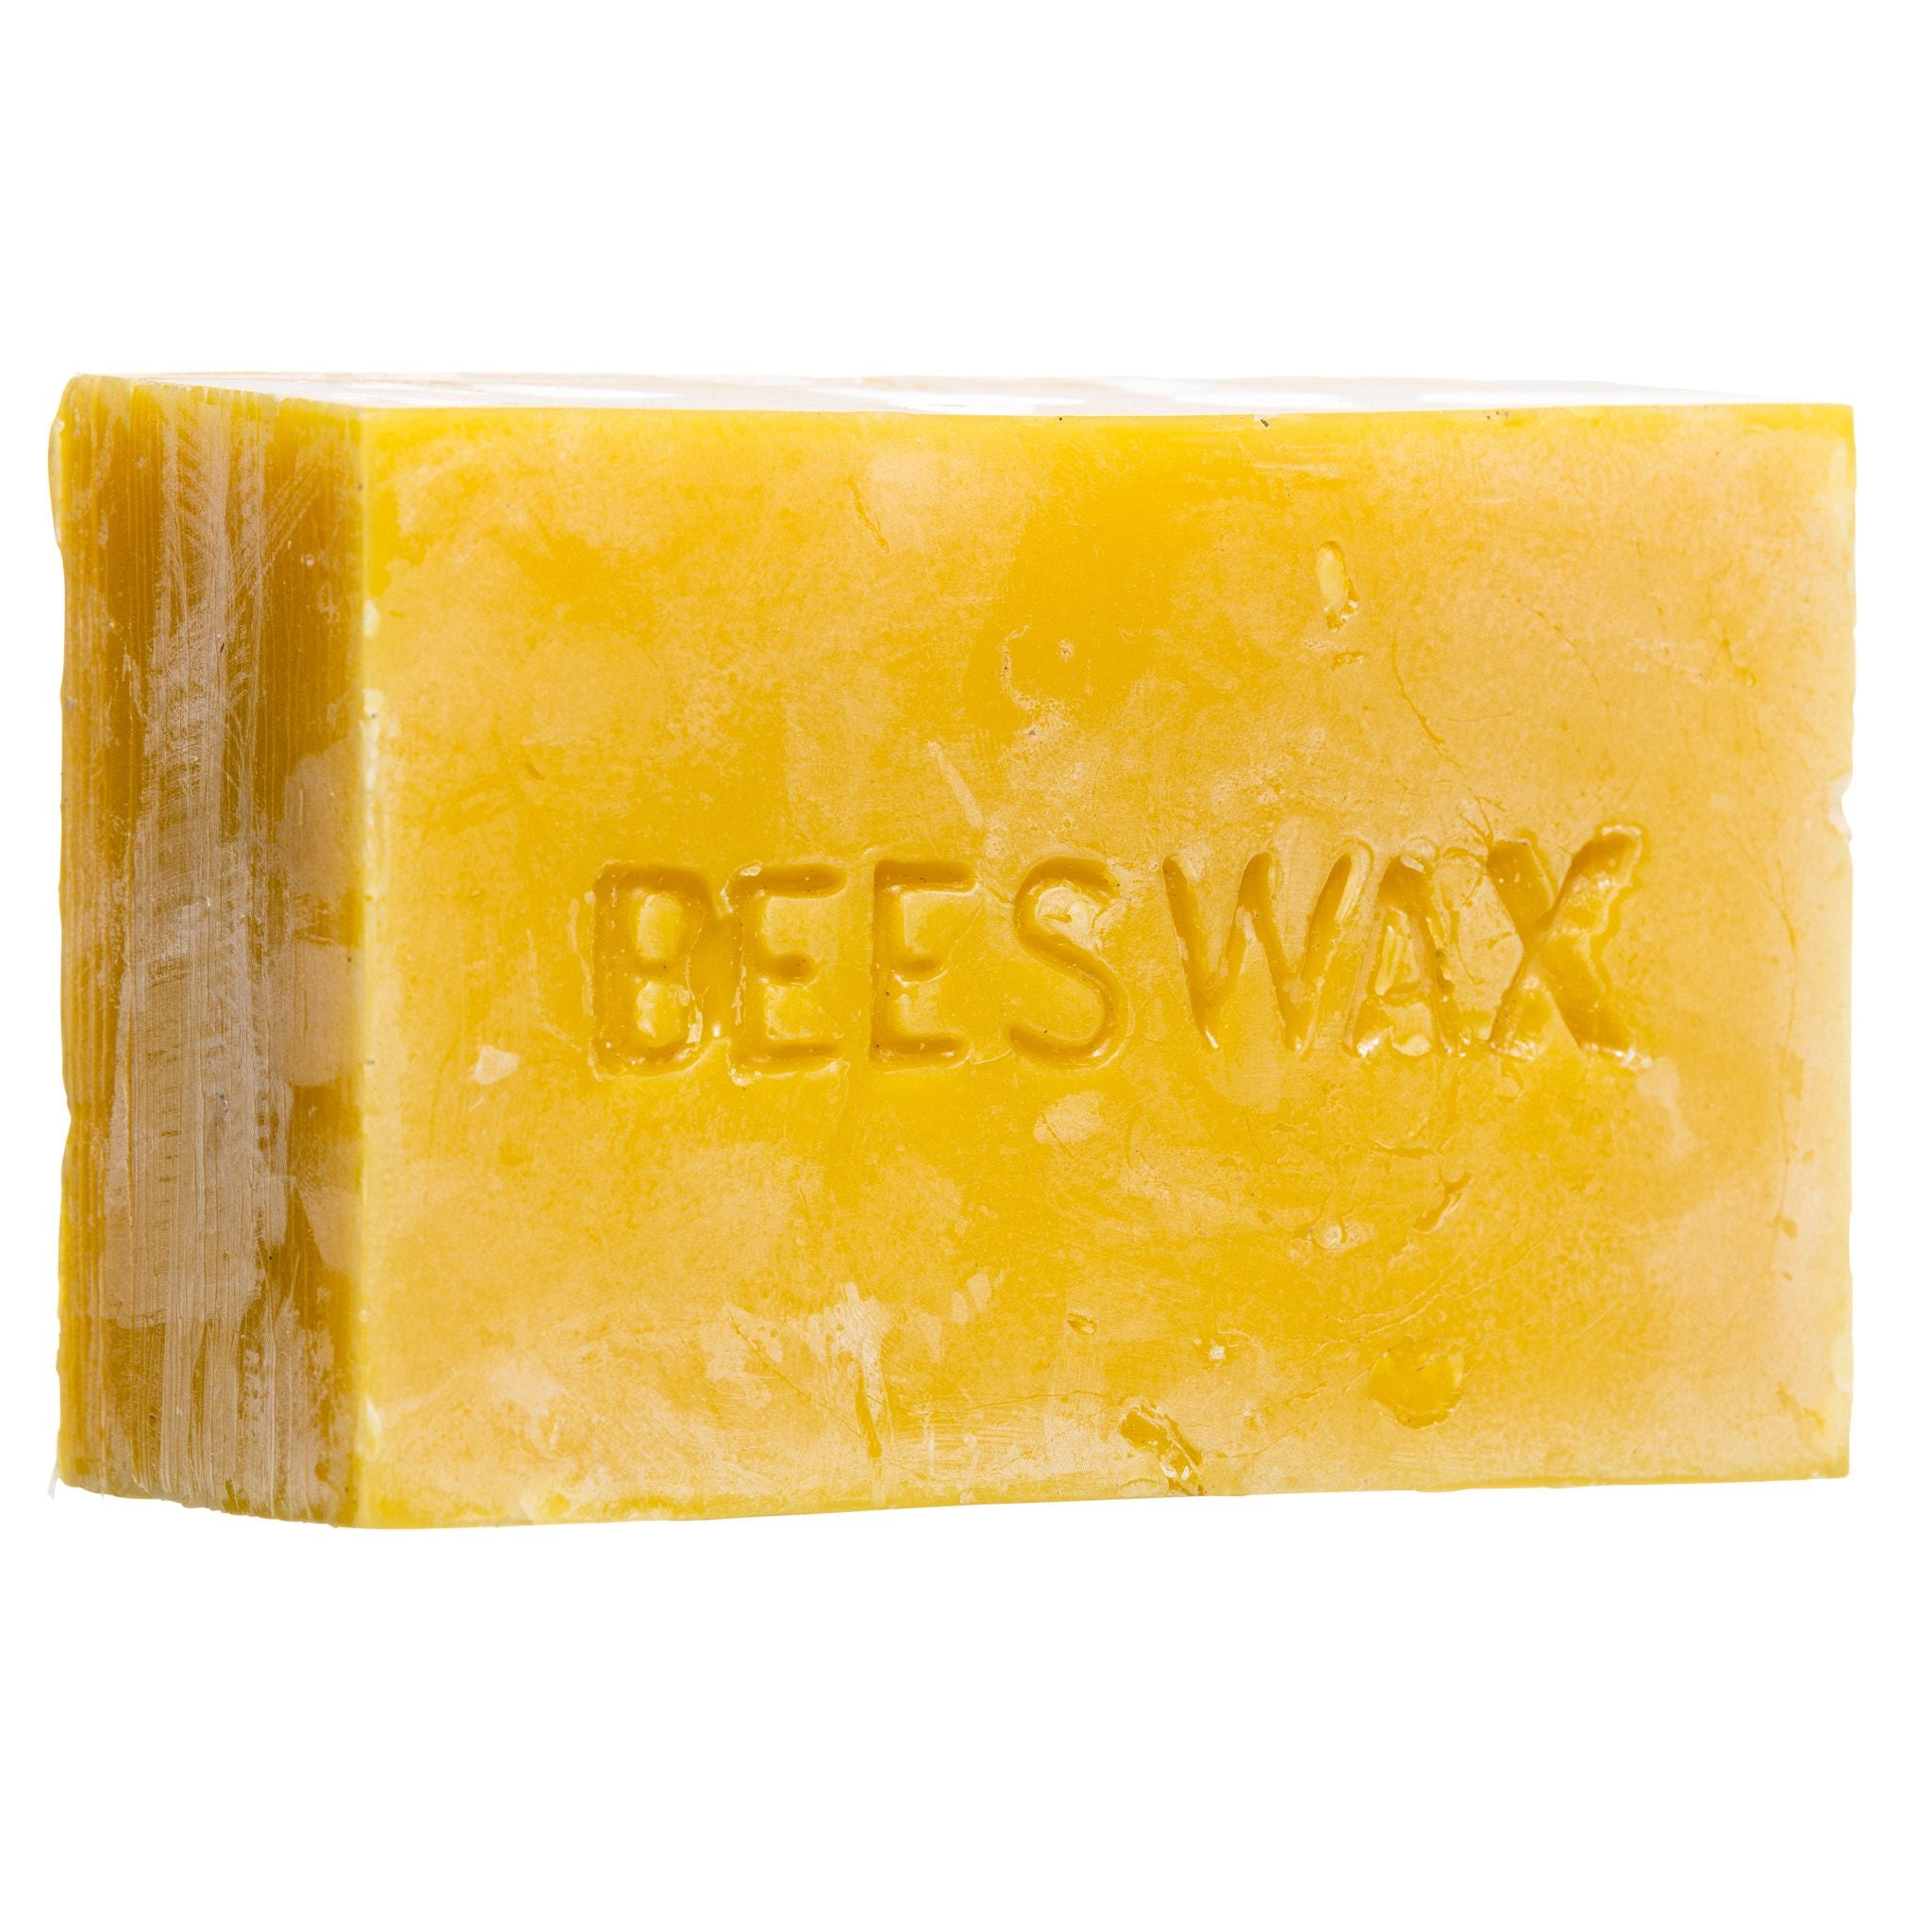 Pure beeswax, 100% bees wax, beeswax block, beeswax bulk for candles,  natural